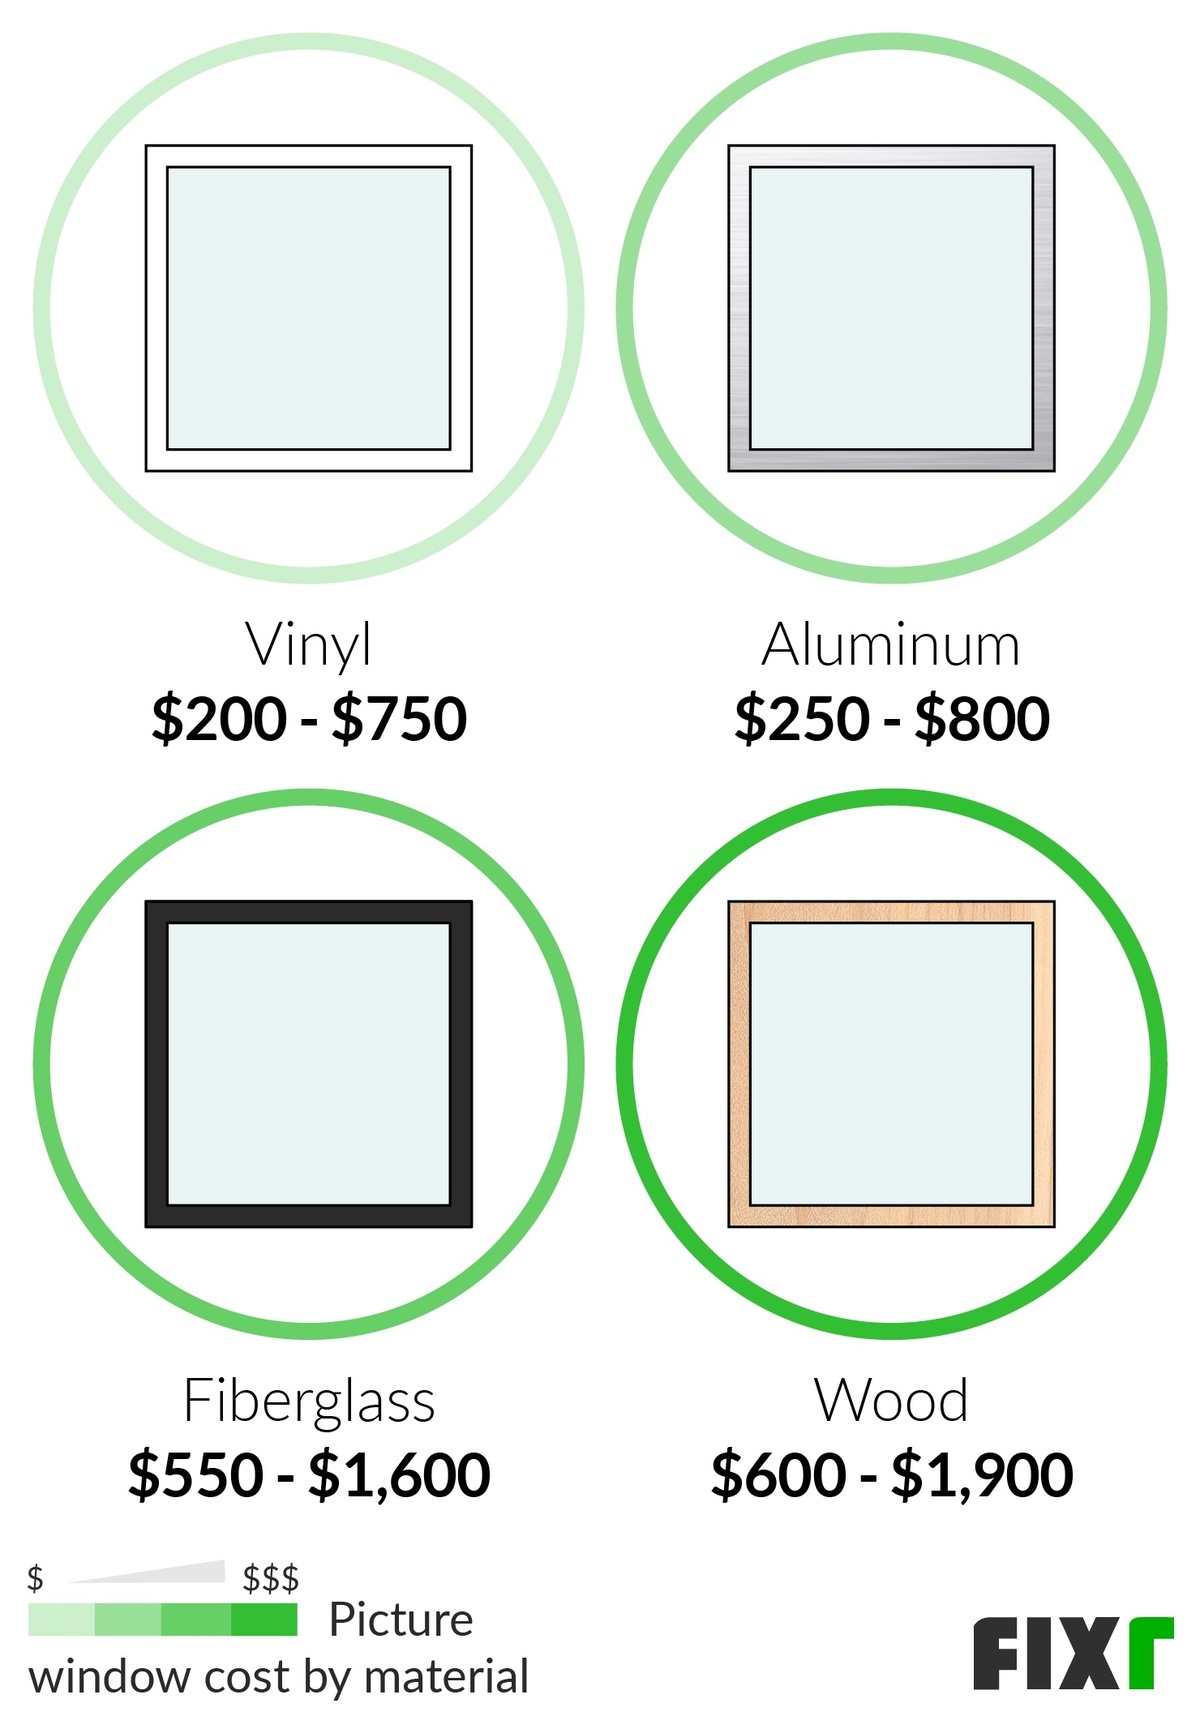 Cost of a Vinyl, Aluminum, Fiberglass, and Wood Picture Window